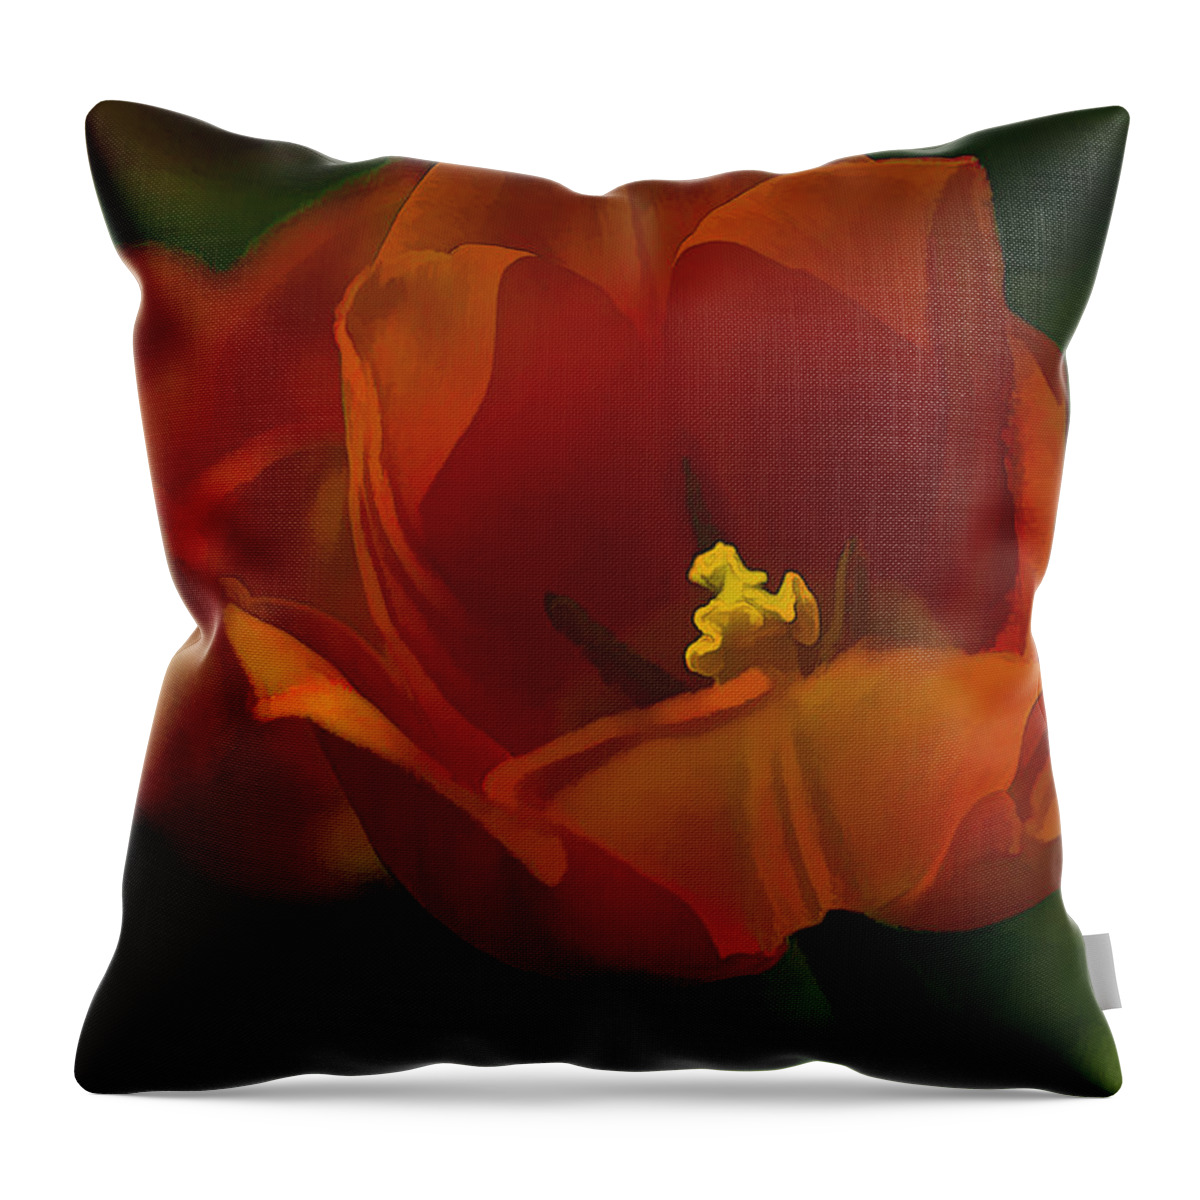 Flower Throw Pillow featuring the photograph Orange Tulip Art by Deborah Benoit